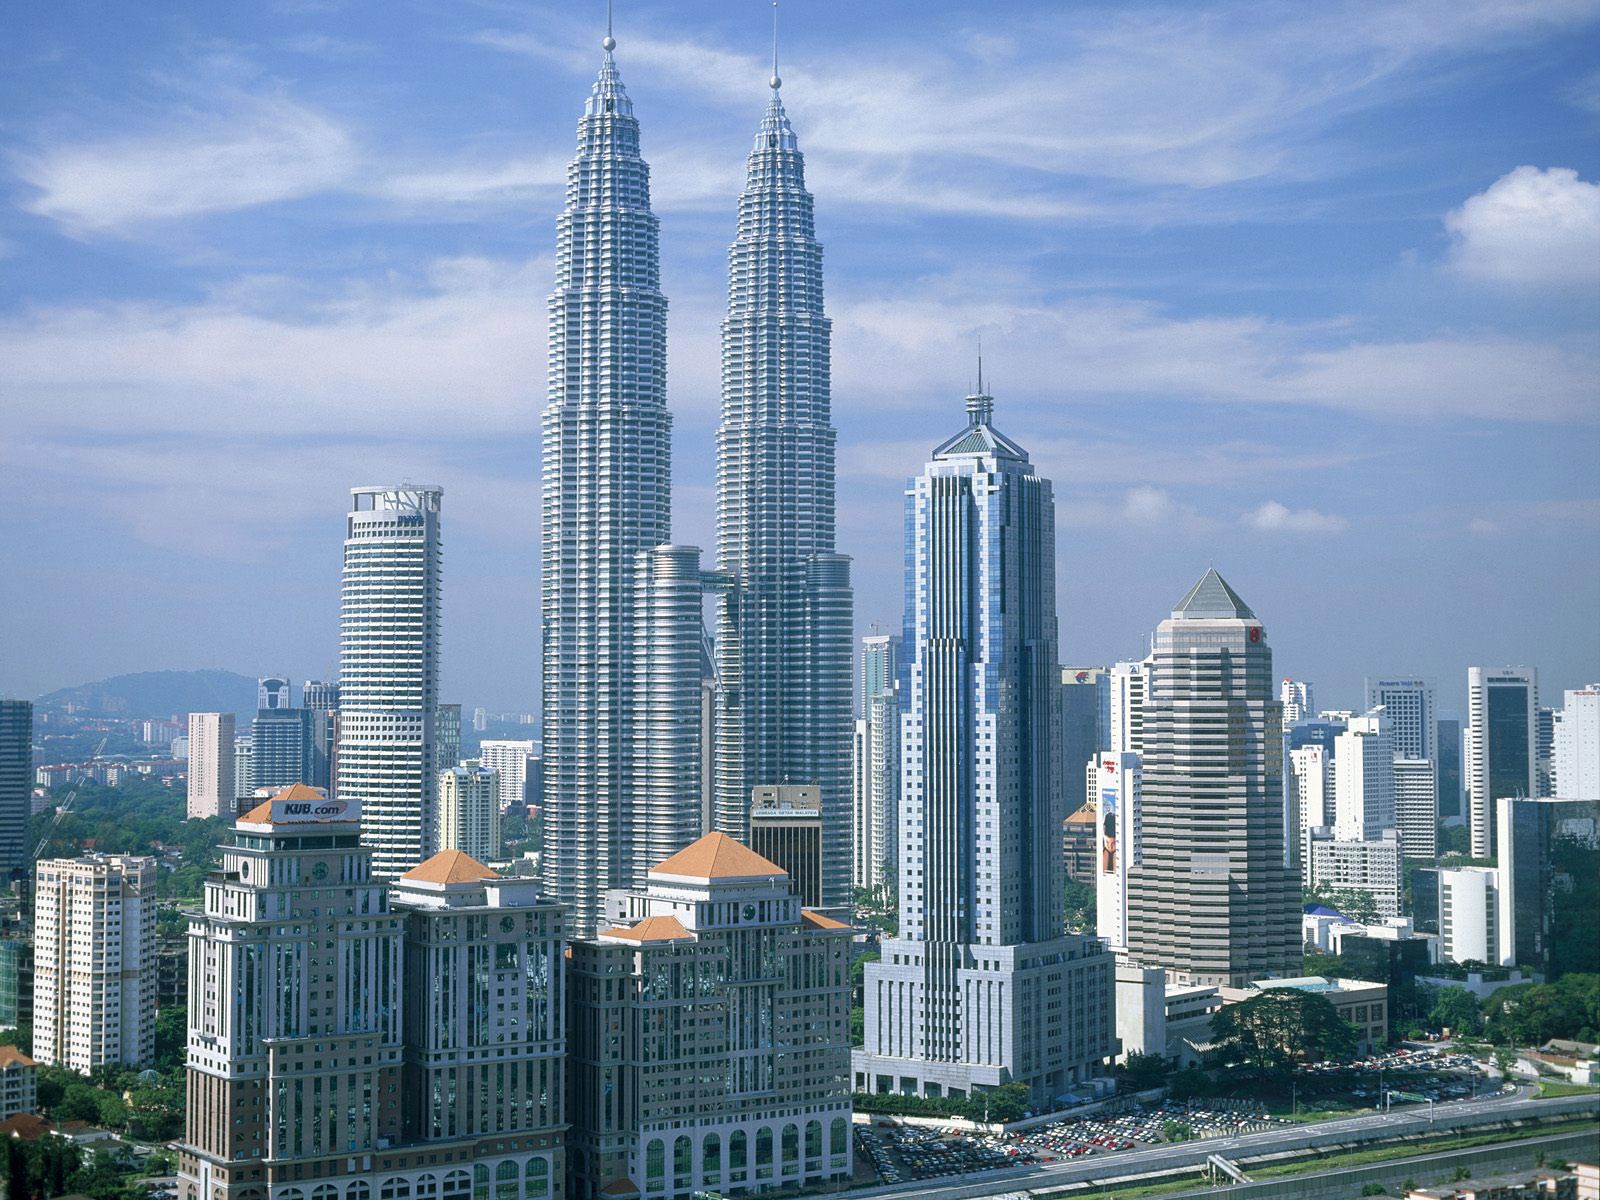 Skip the Line: Kuala Lumpur Petronas Twin Towers Admission Ticket ...